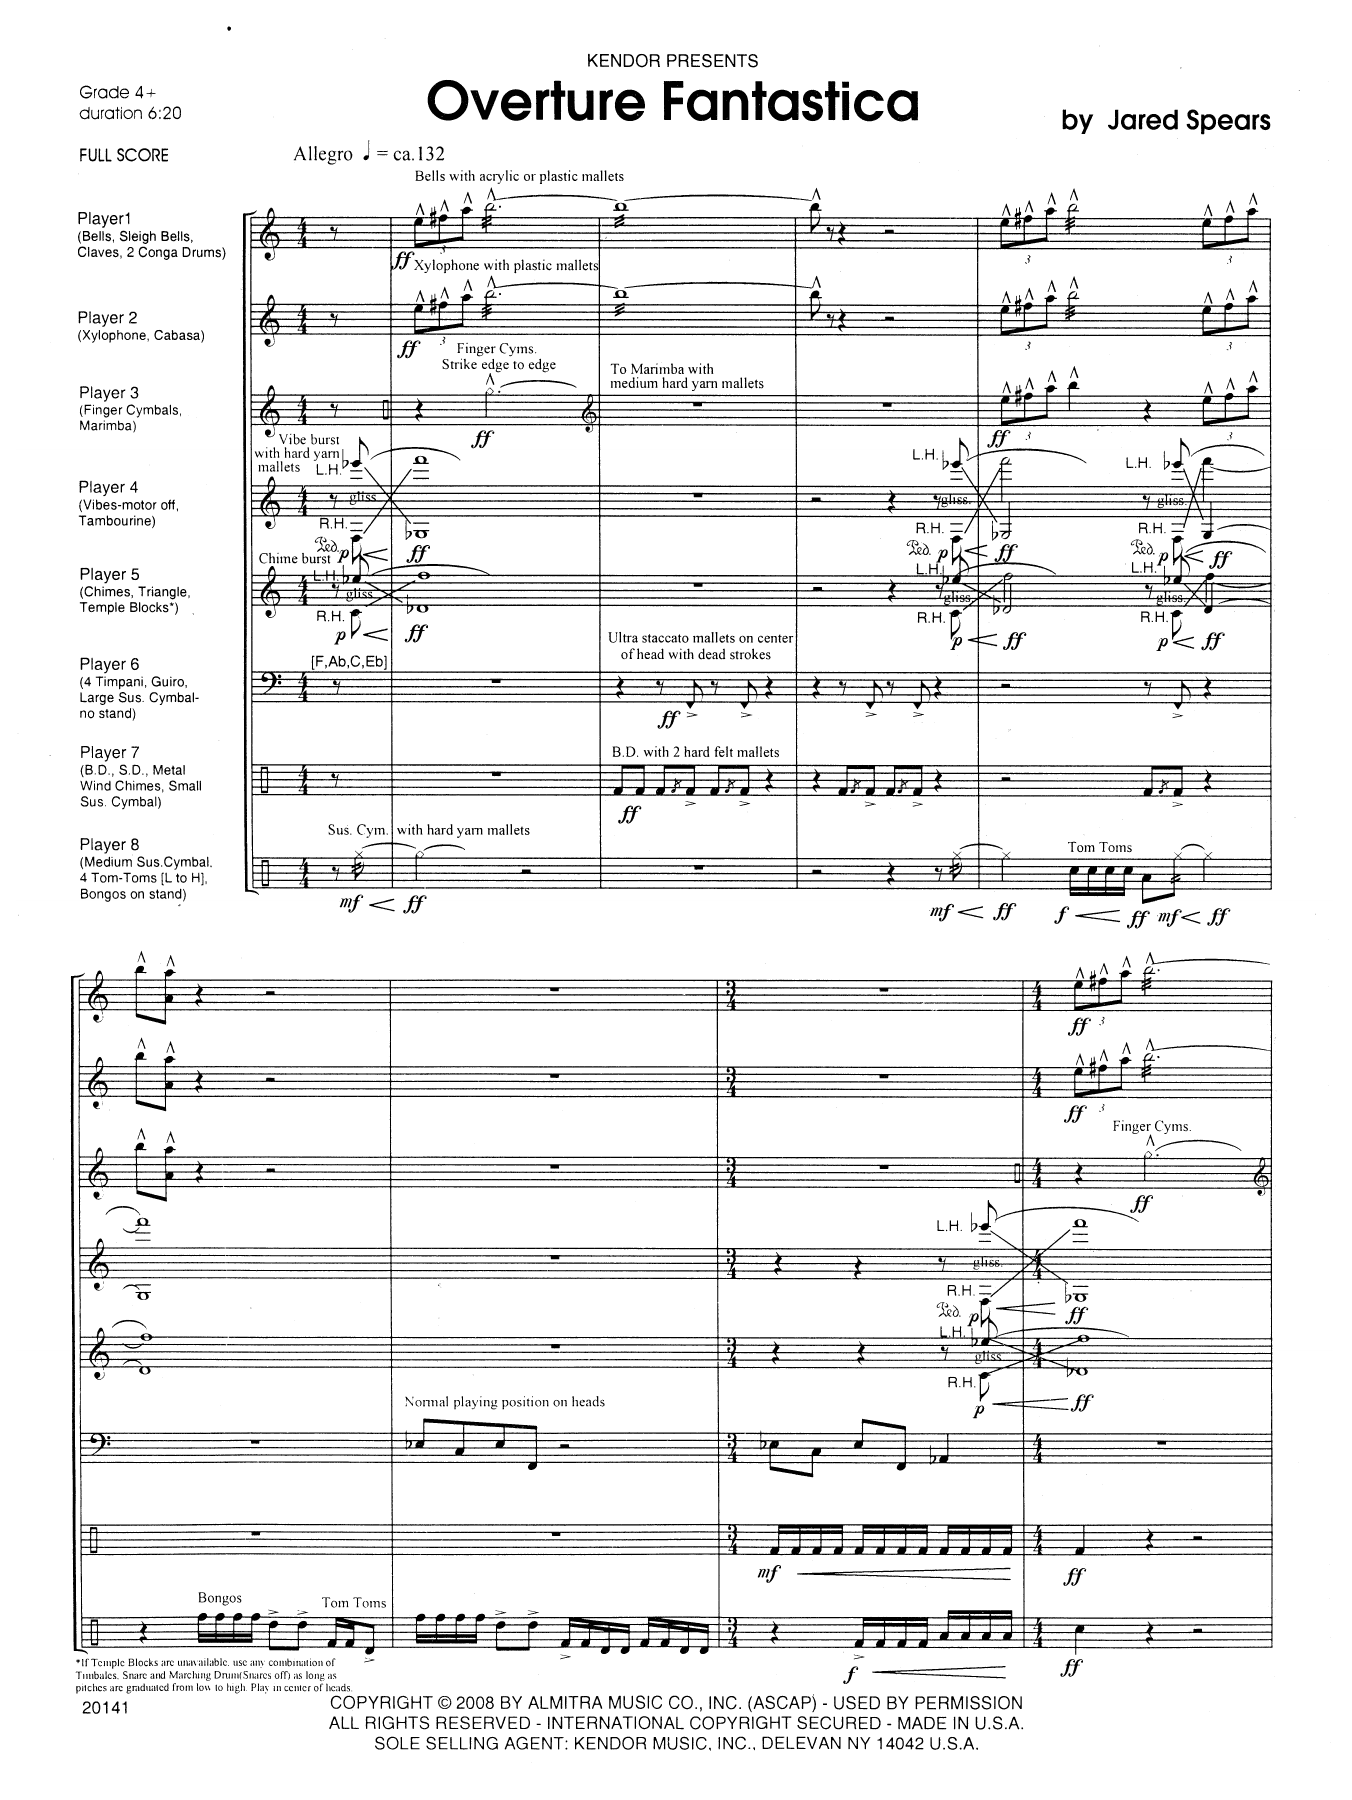 Download Jared Spears Overture Fantastica - Full Score Sheet Music